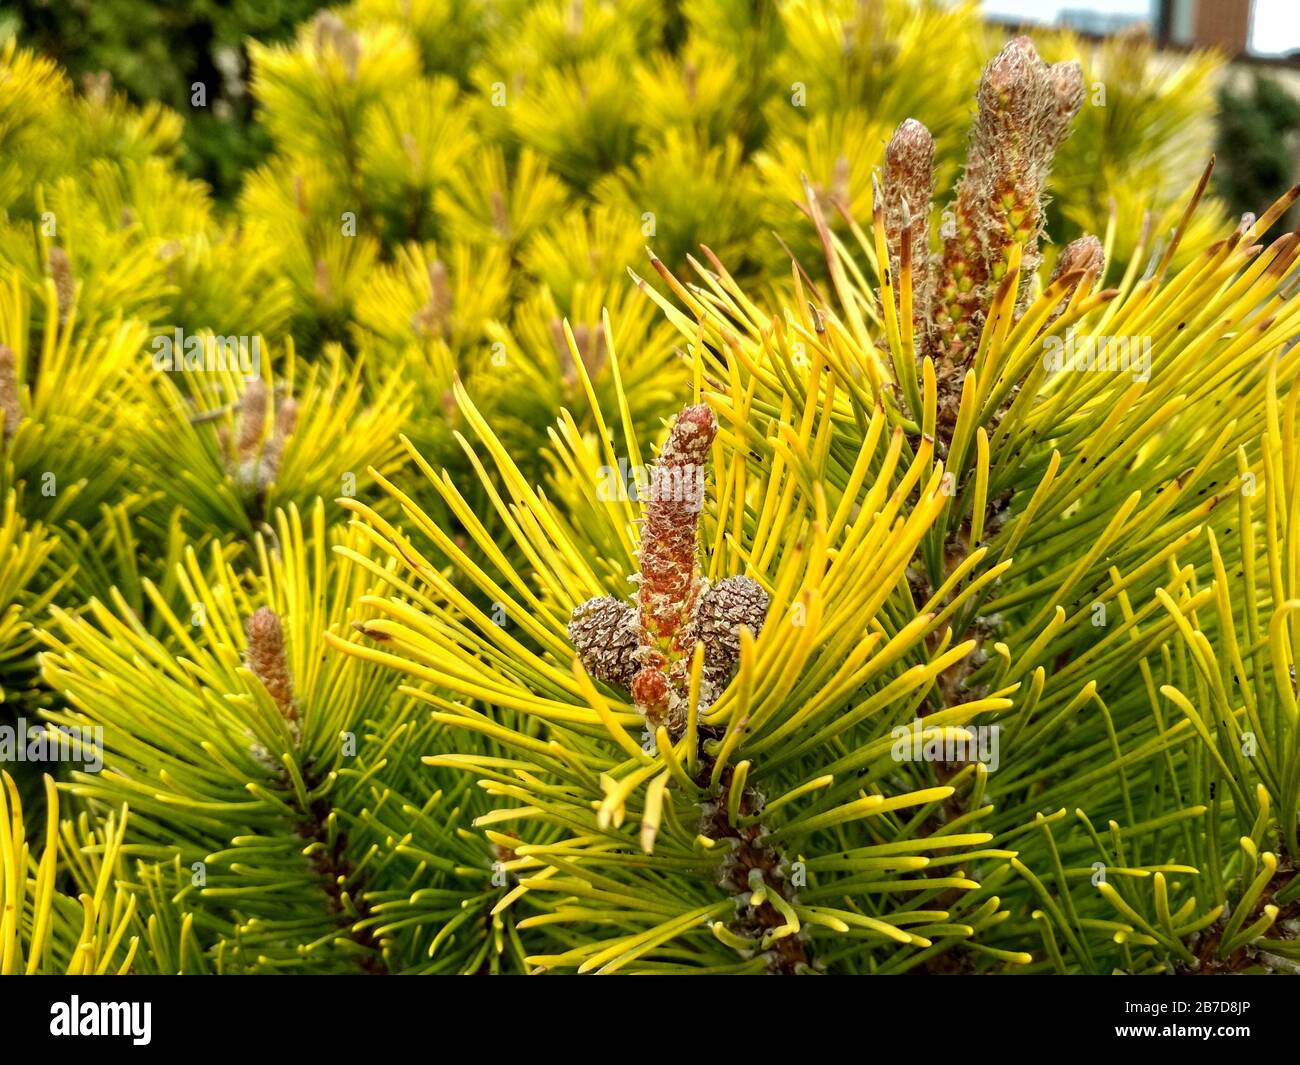 Young Pine buds in spring. Pinus mugo, dwarf mountain pine, mugo pine. Pinus mugo winter gold Stock Photo